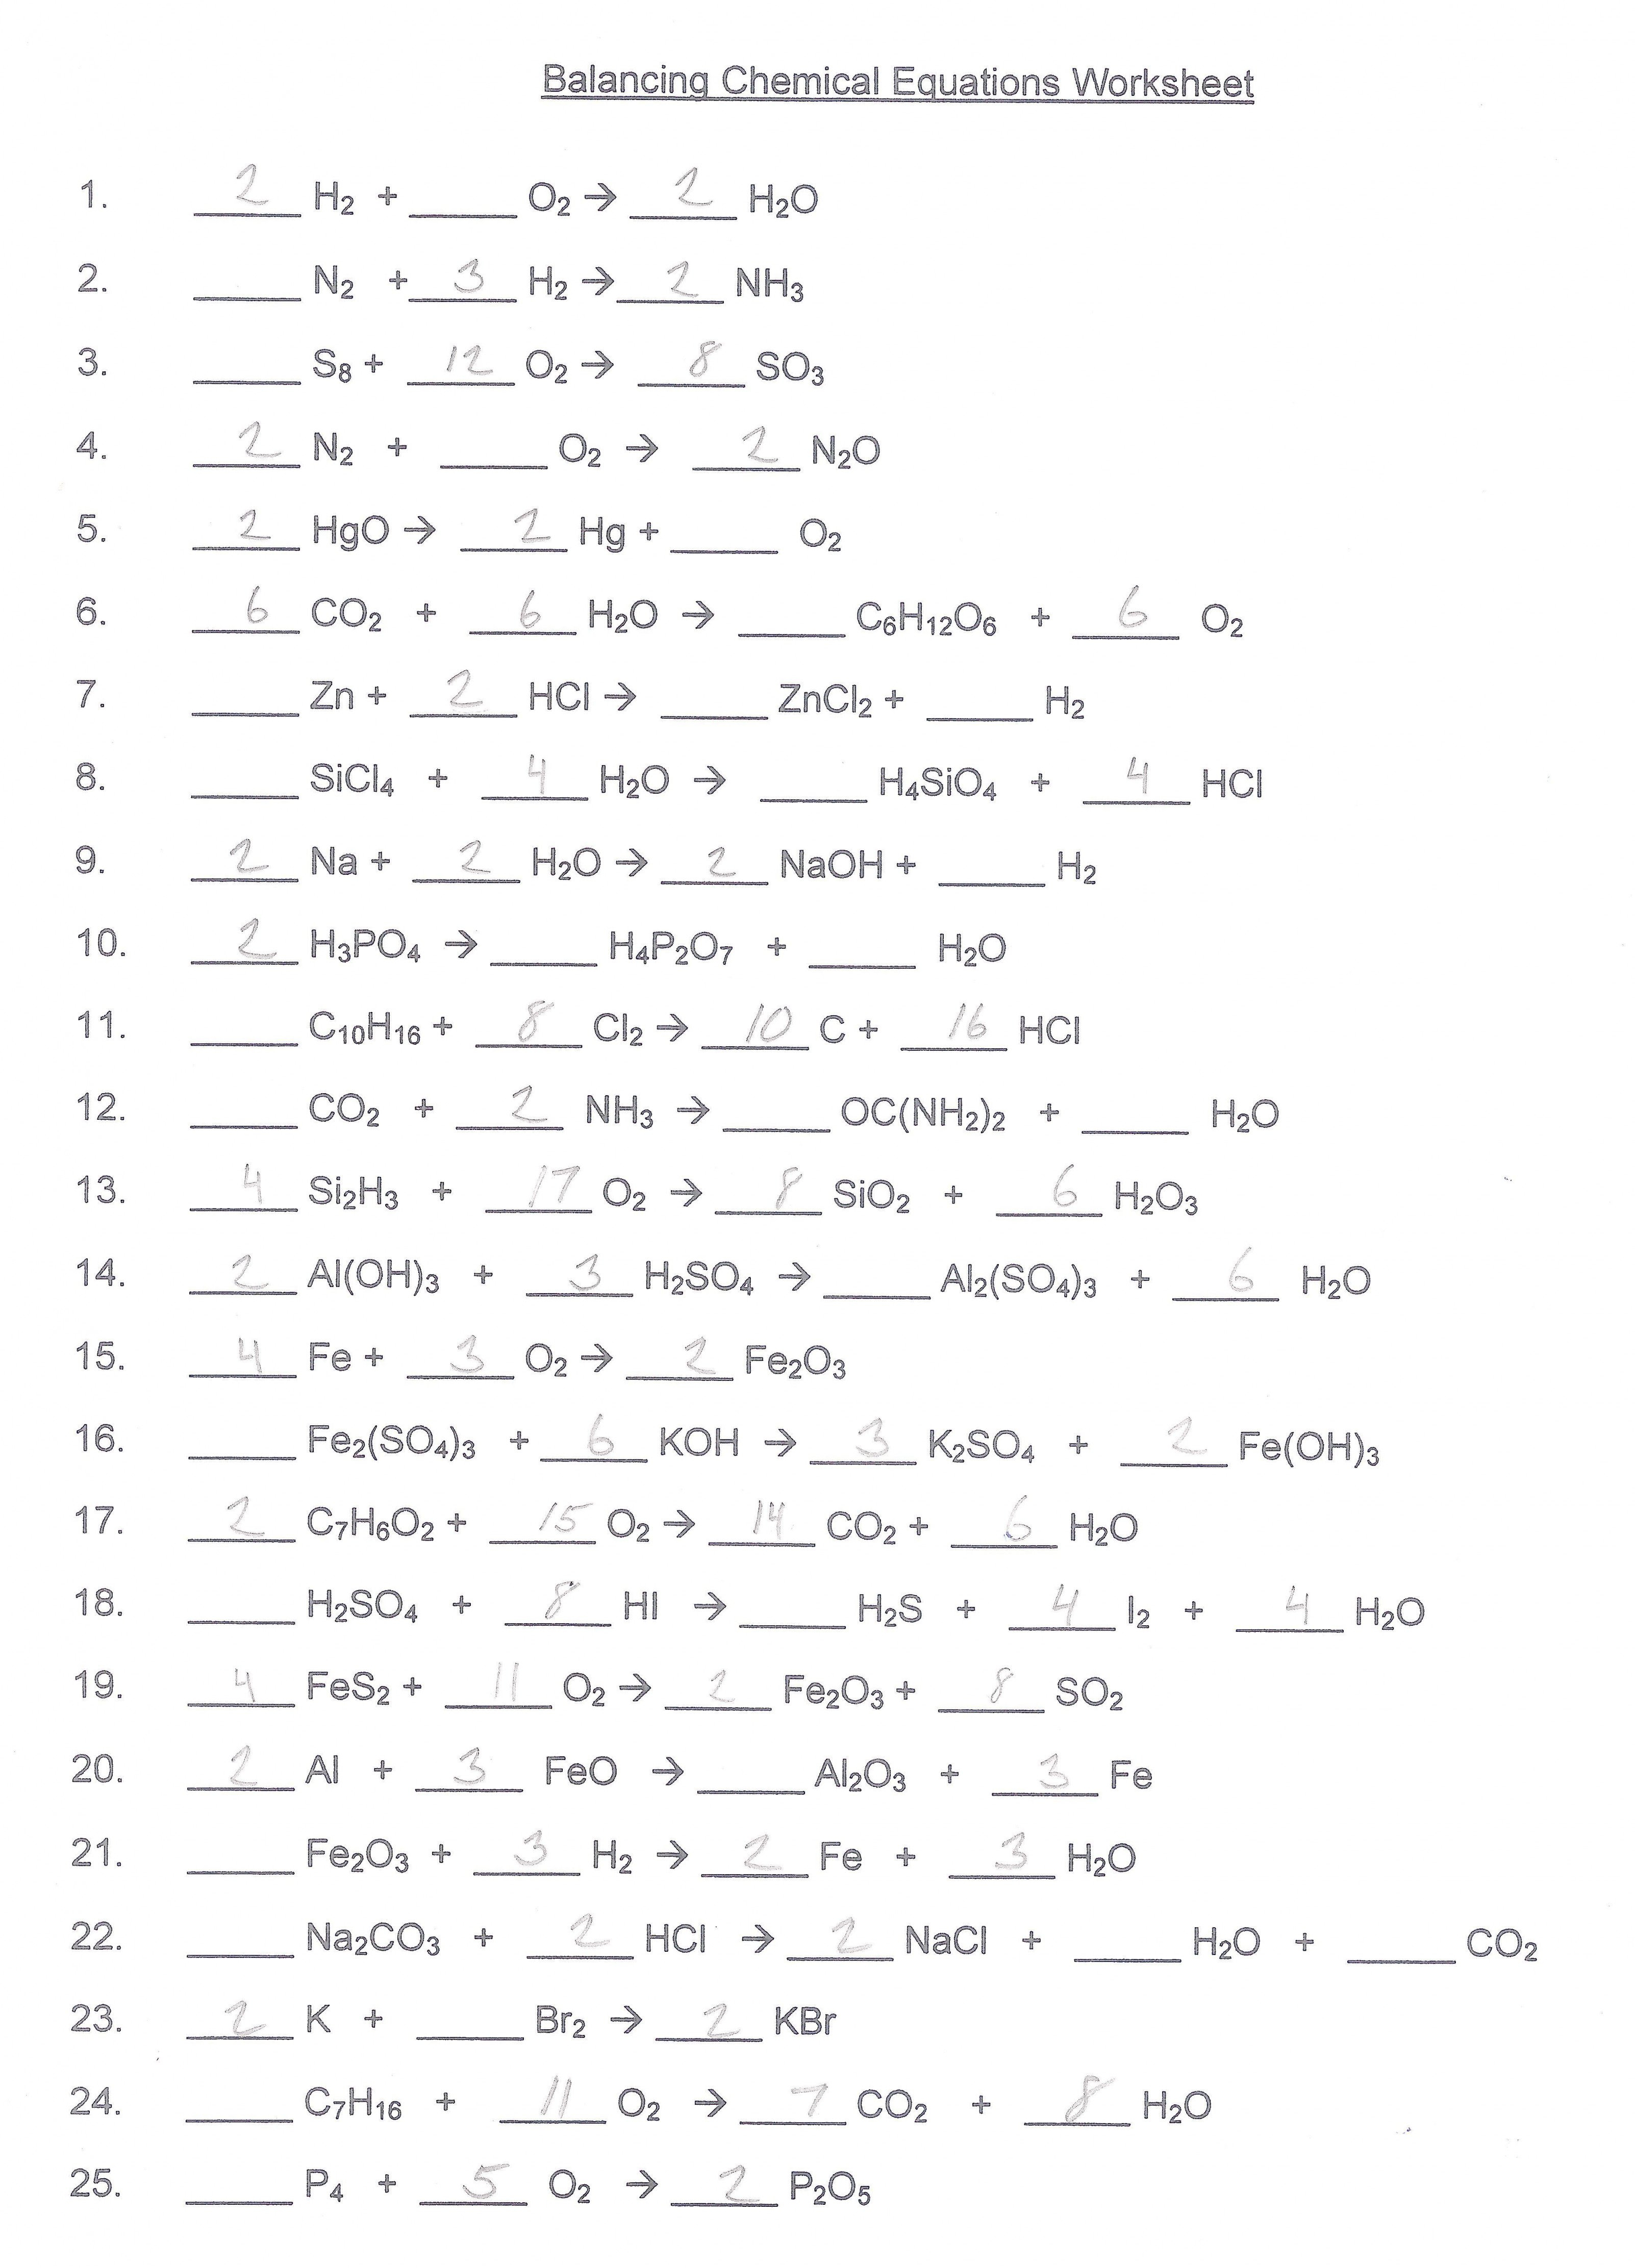 Balancing Equations Worksheet 1  Lobo Black With Balancing Chemical Equations Worksheet Answer Key 1 25